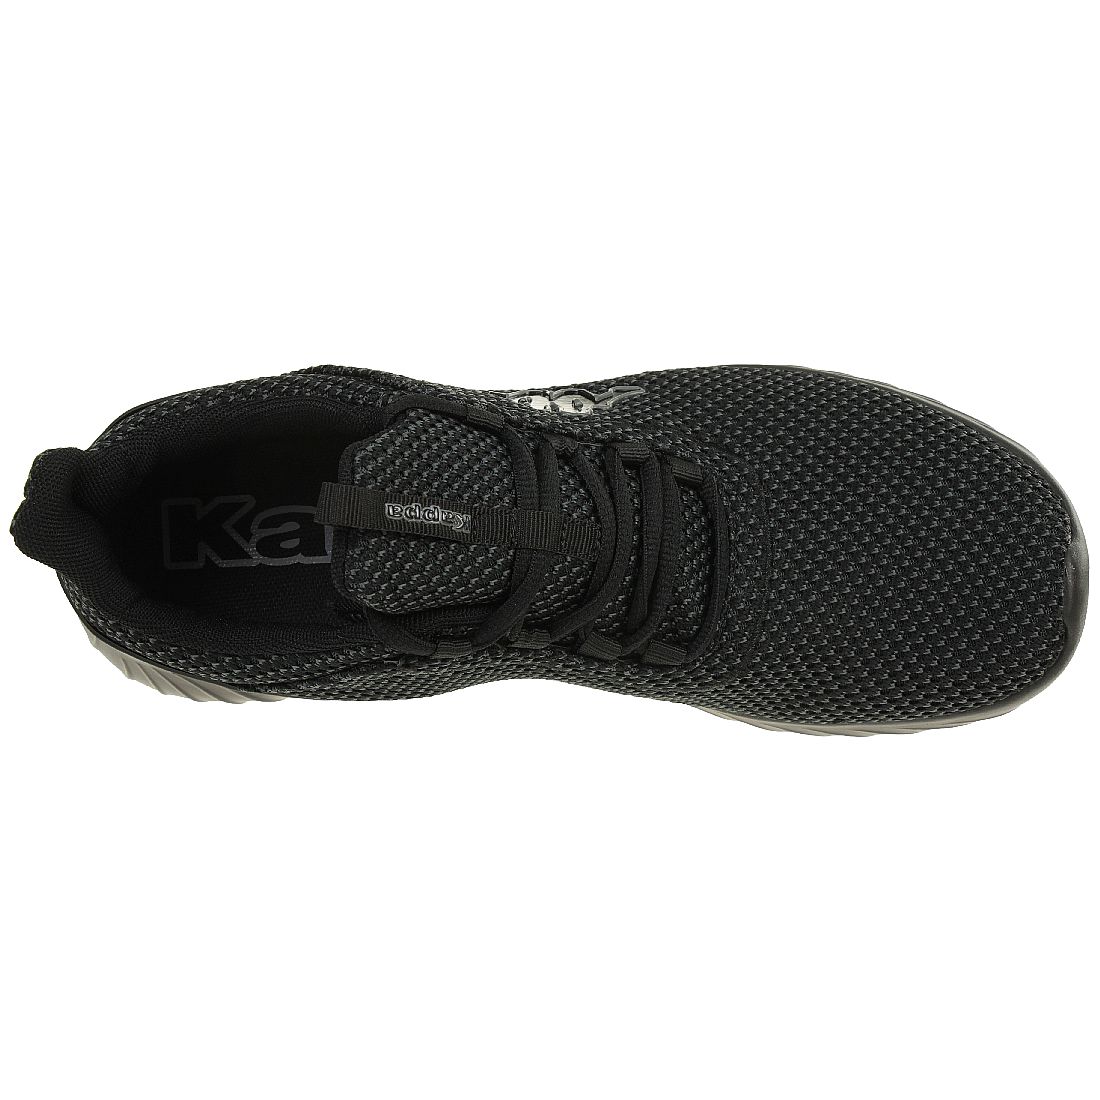 Kappa Hector Sneaker Unisex Turnschuhe Schuhe schwarz 242768